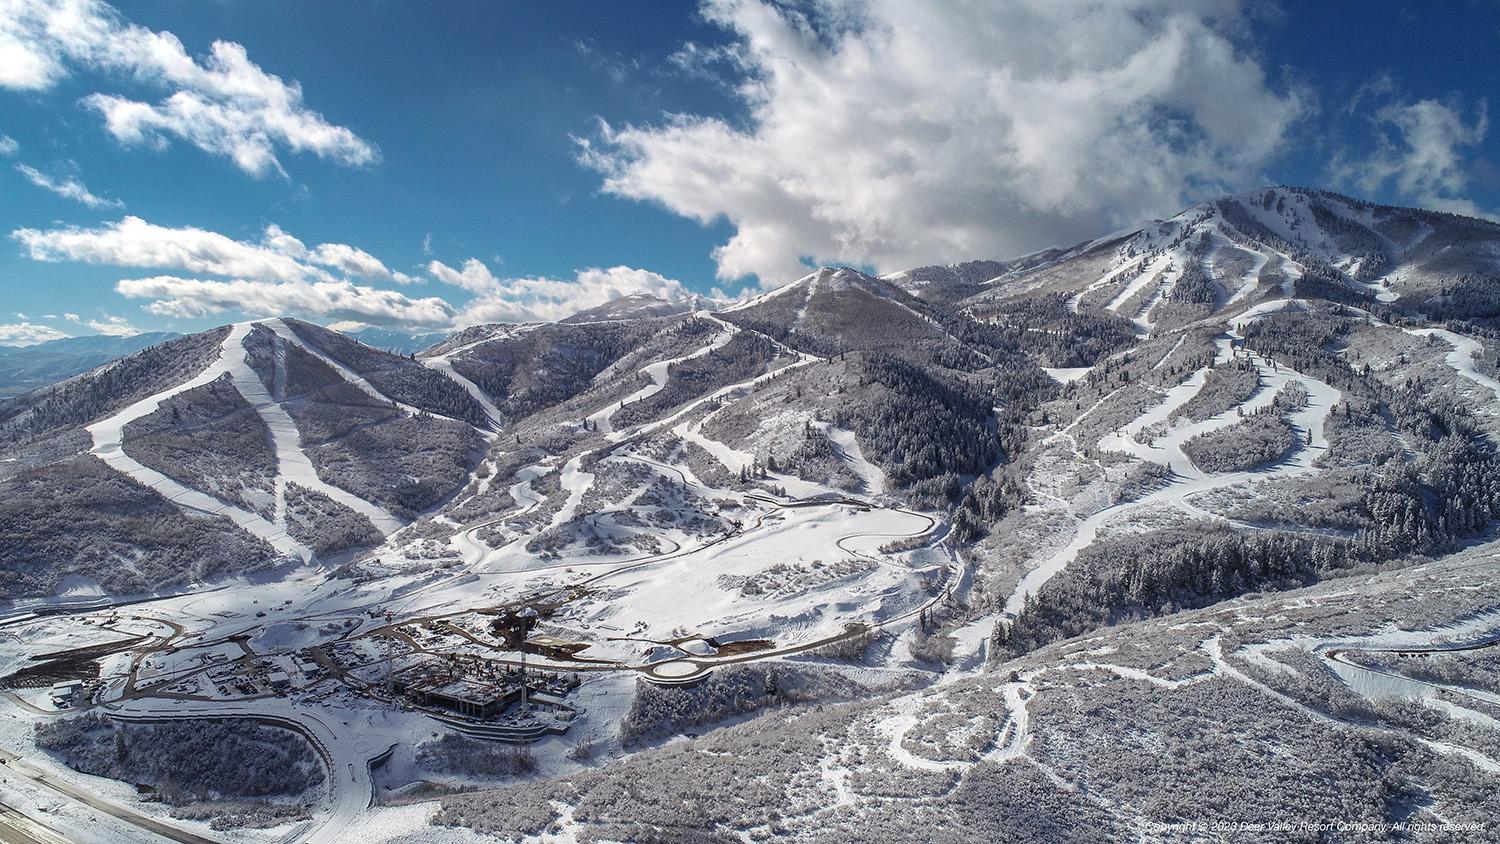 Aerial view of a ski resort in winter